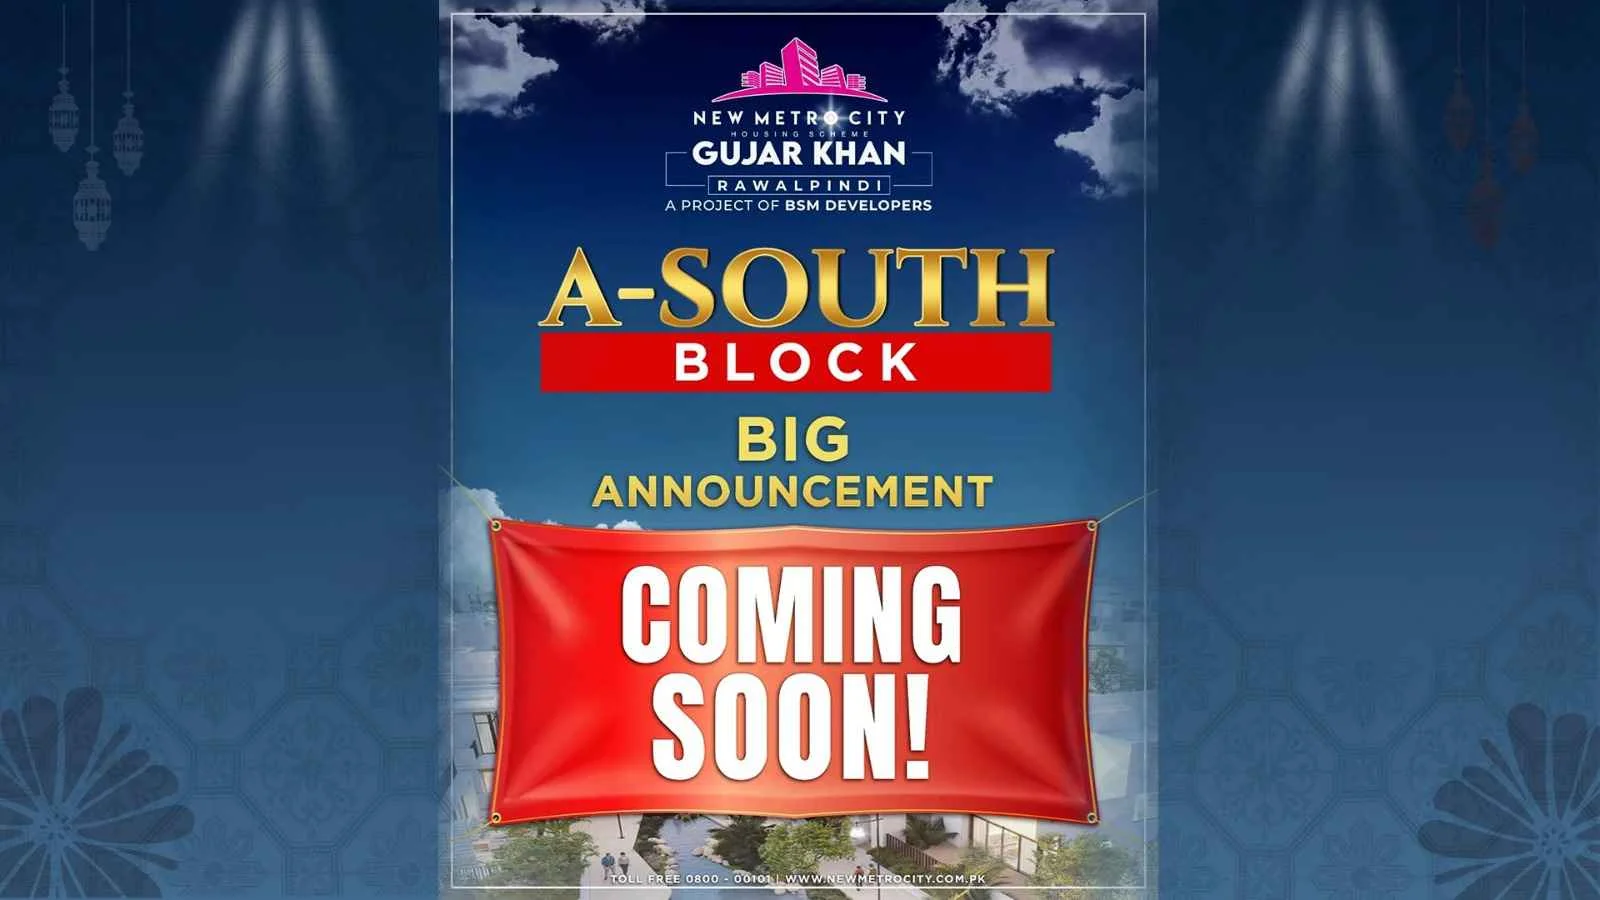 A- South Block Announcement